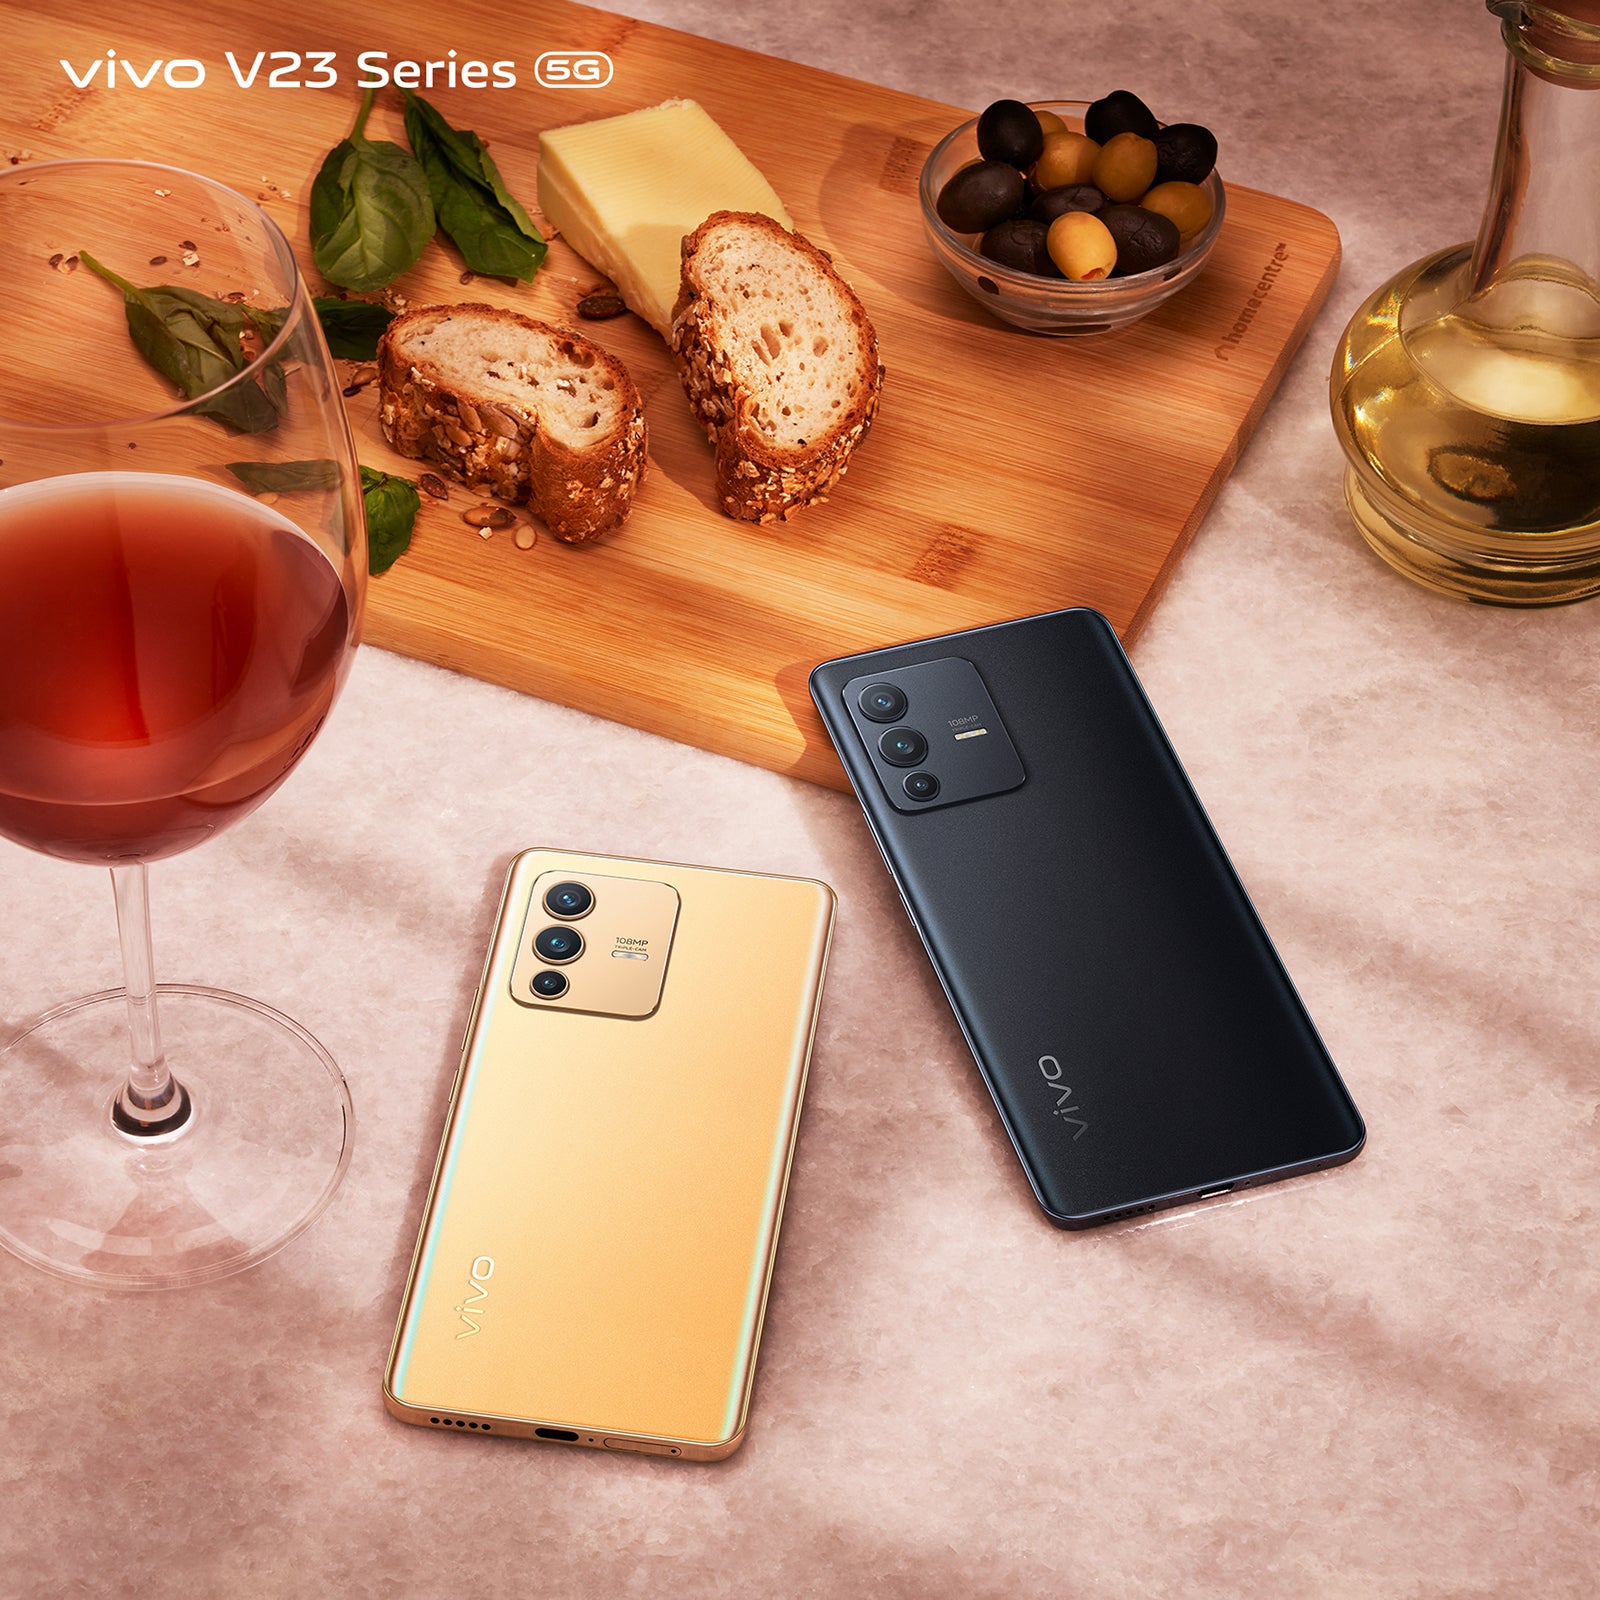 Vivo V23 series - Vivo V23 series announced with dual selfie cameras and sleek design